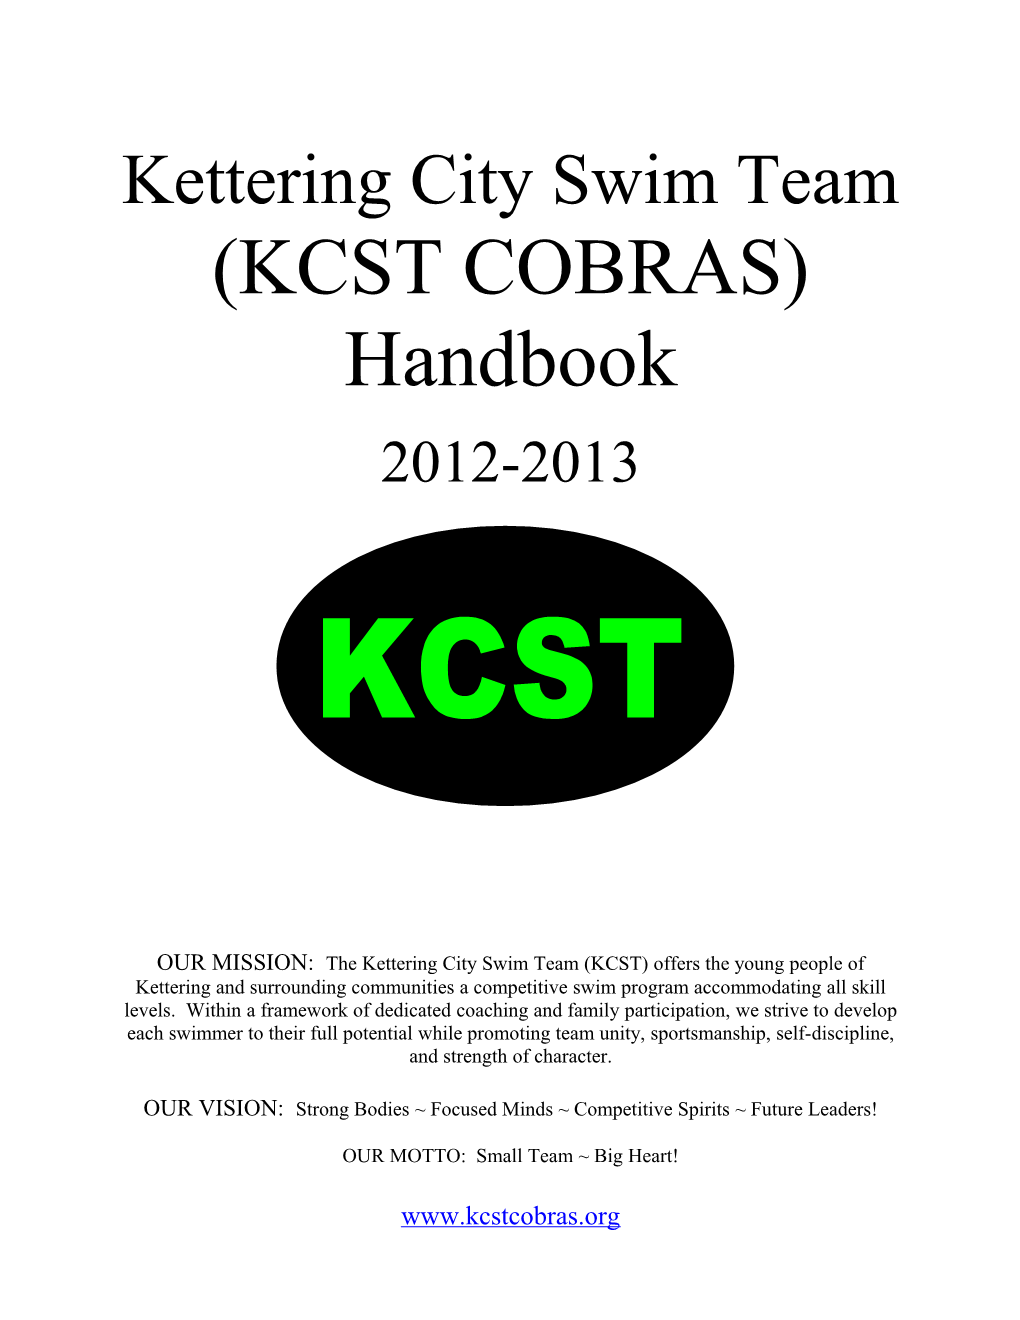 Kettering City Swim Team (KCST COBRAS)